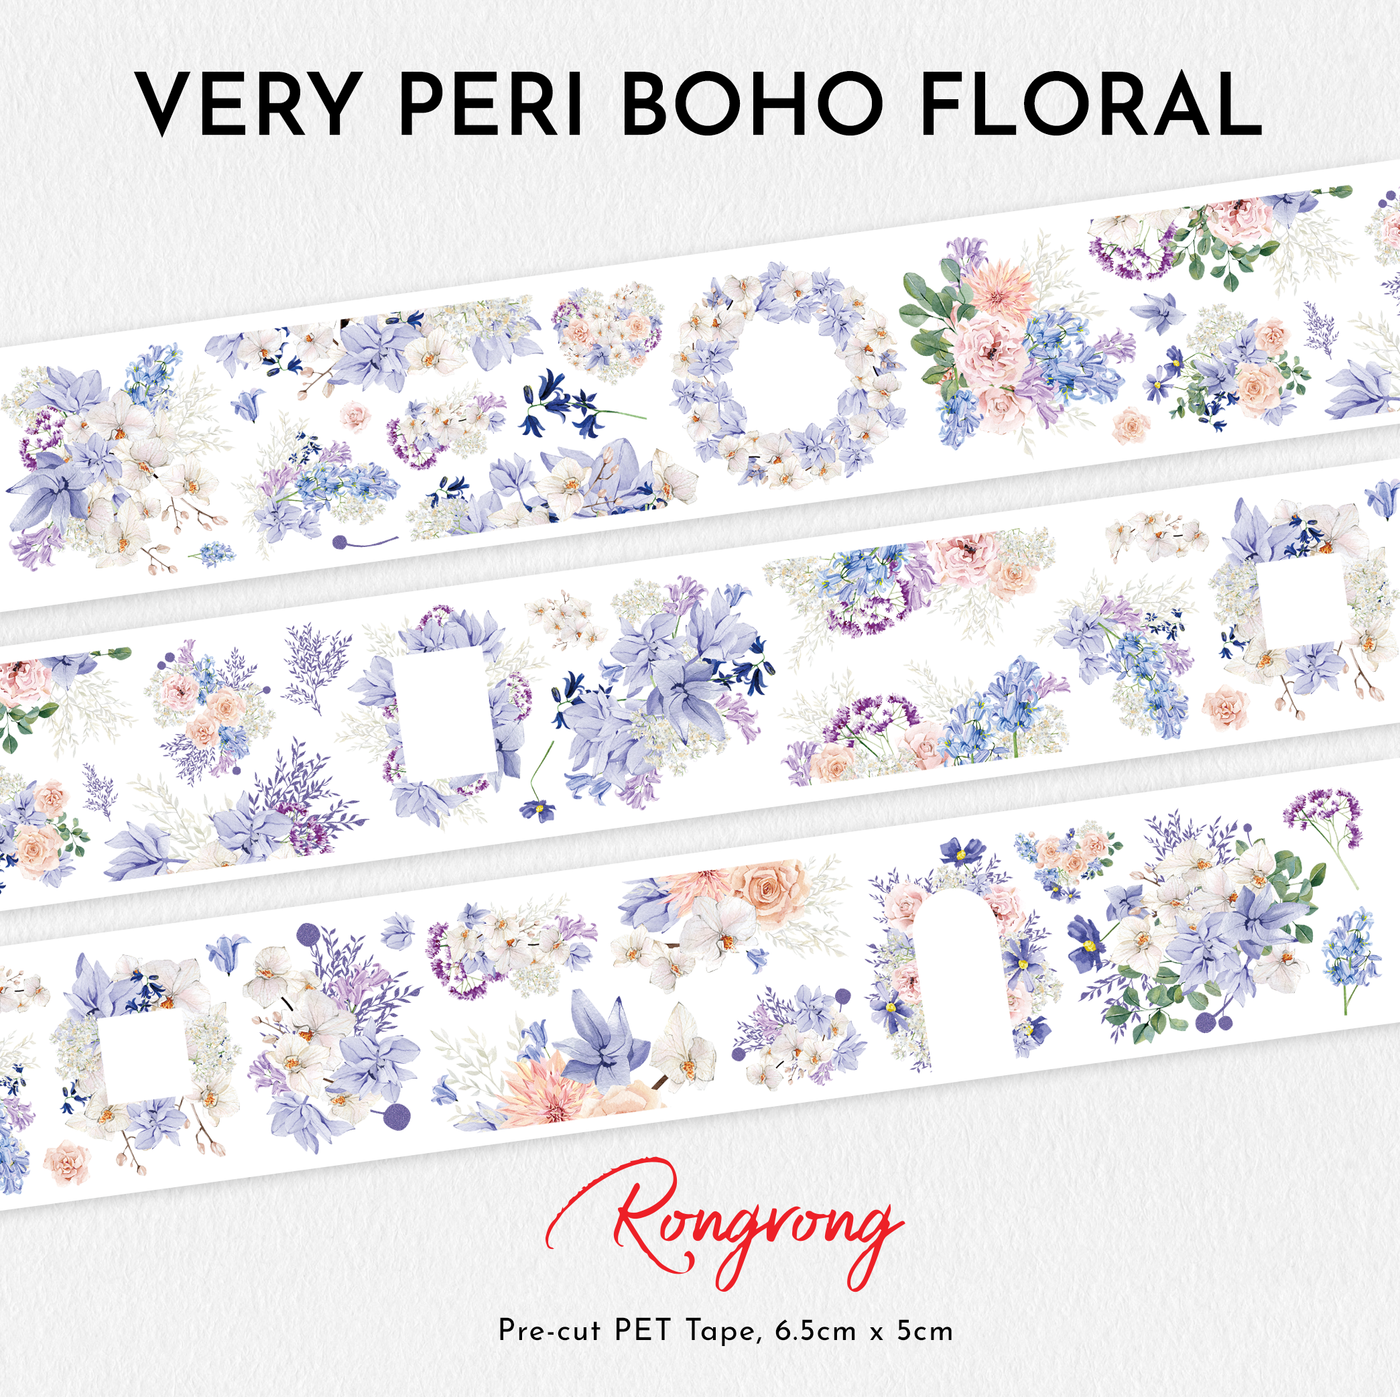 Shop Rongrong Very Peri Boho Floral PET Tape